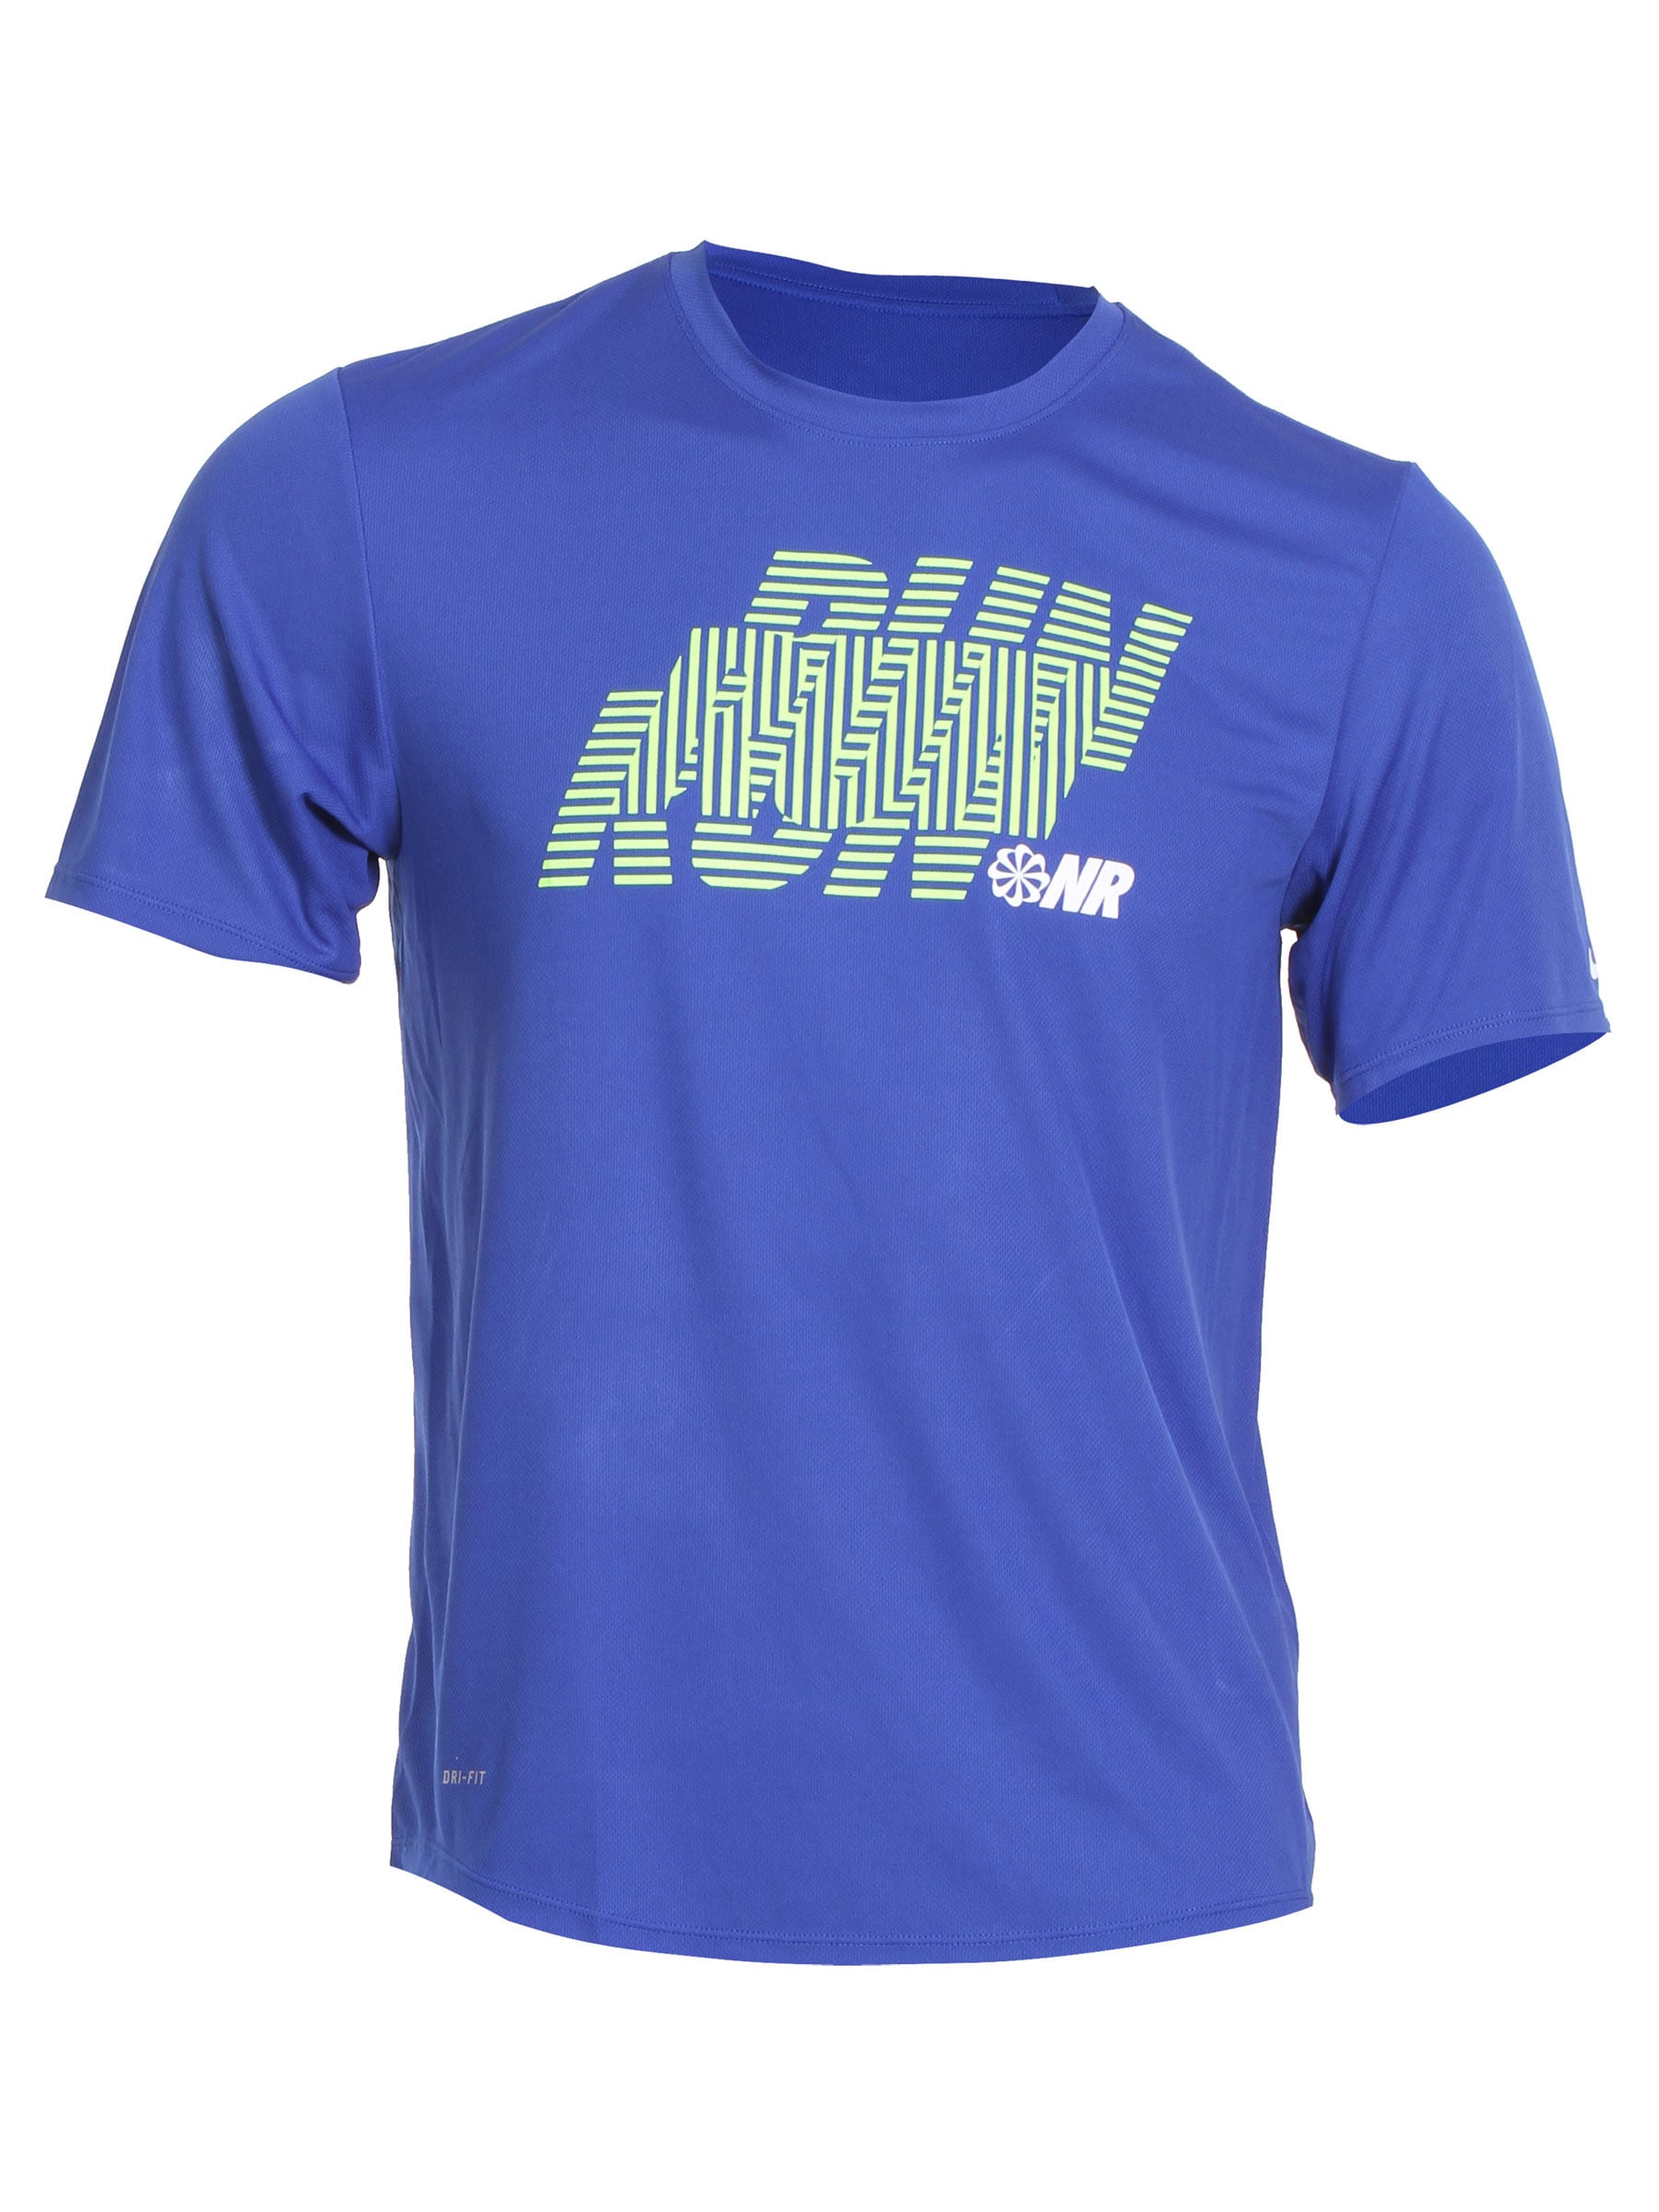 Nike Mens Challenger Graphic Blue T-shirt